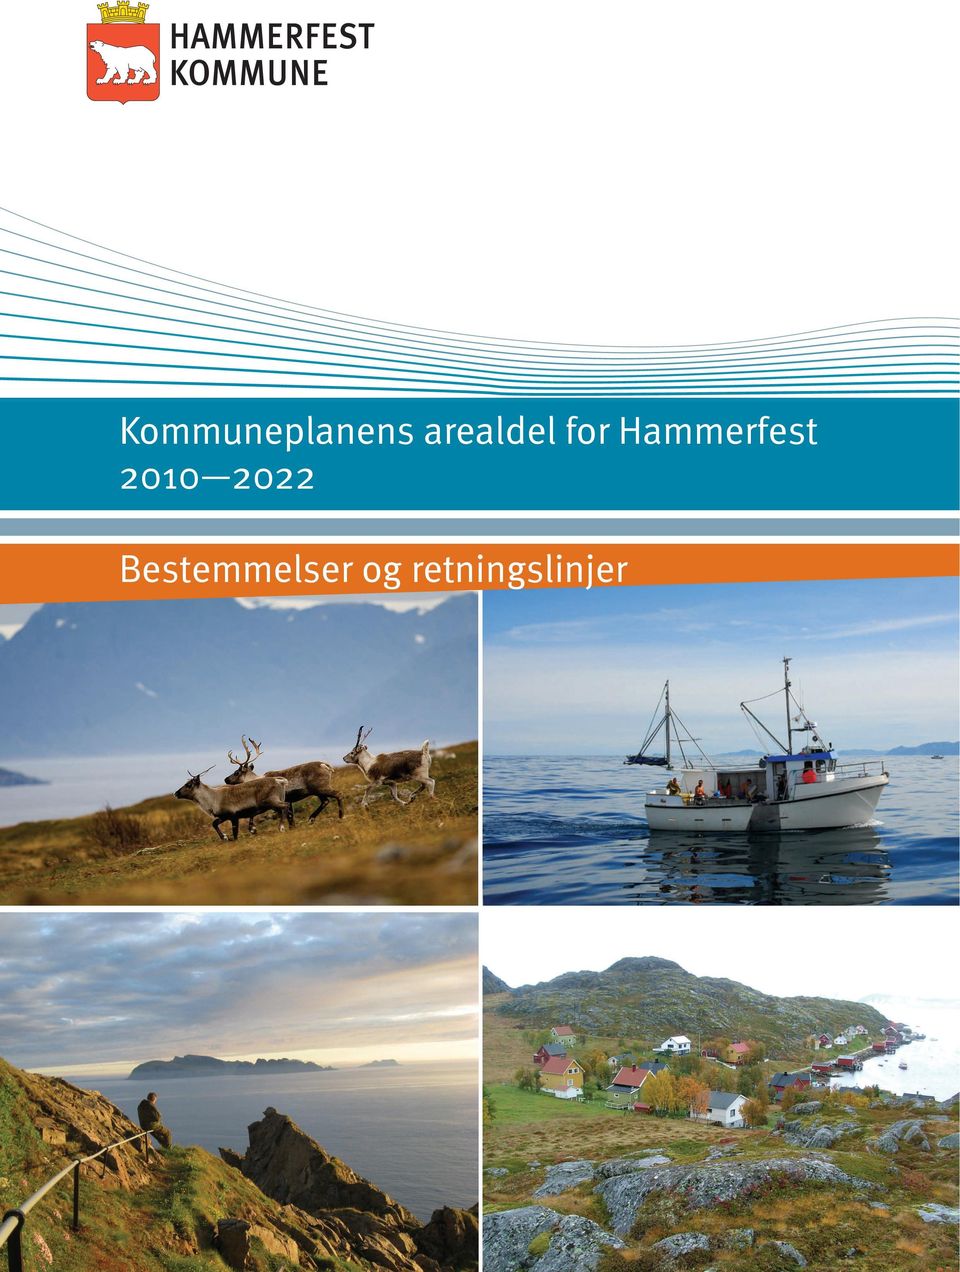 Hammerfest 2010